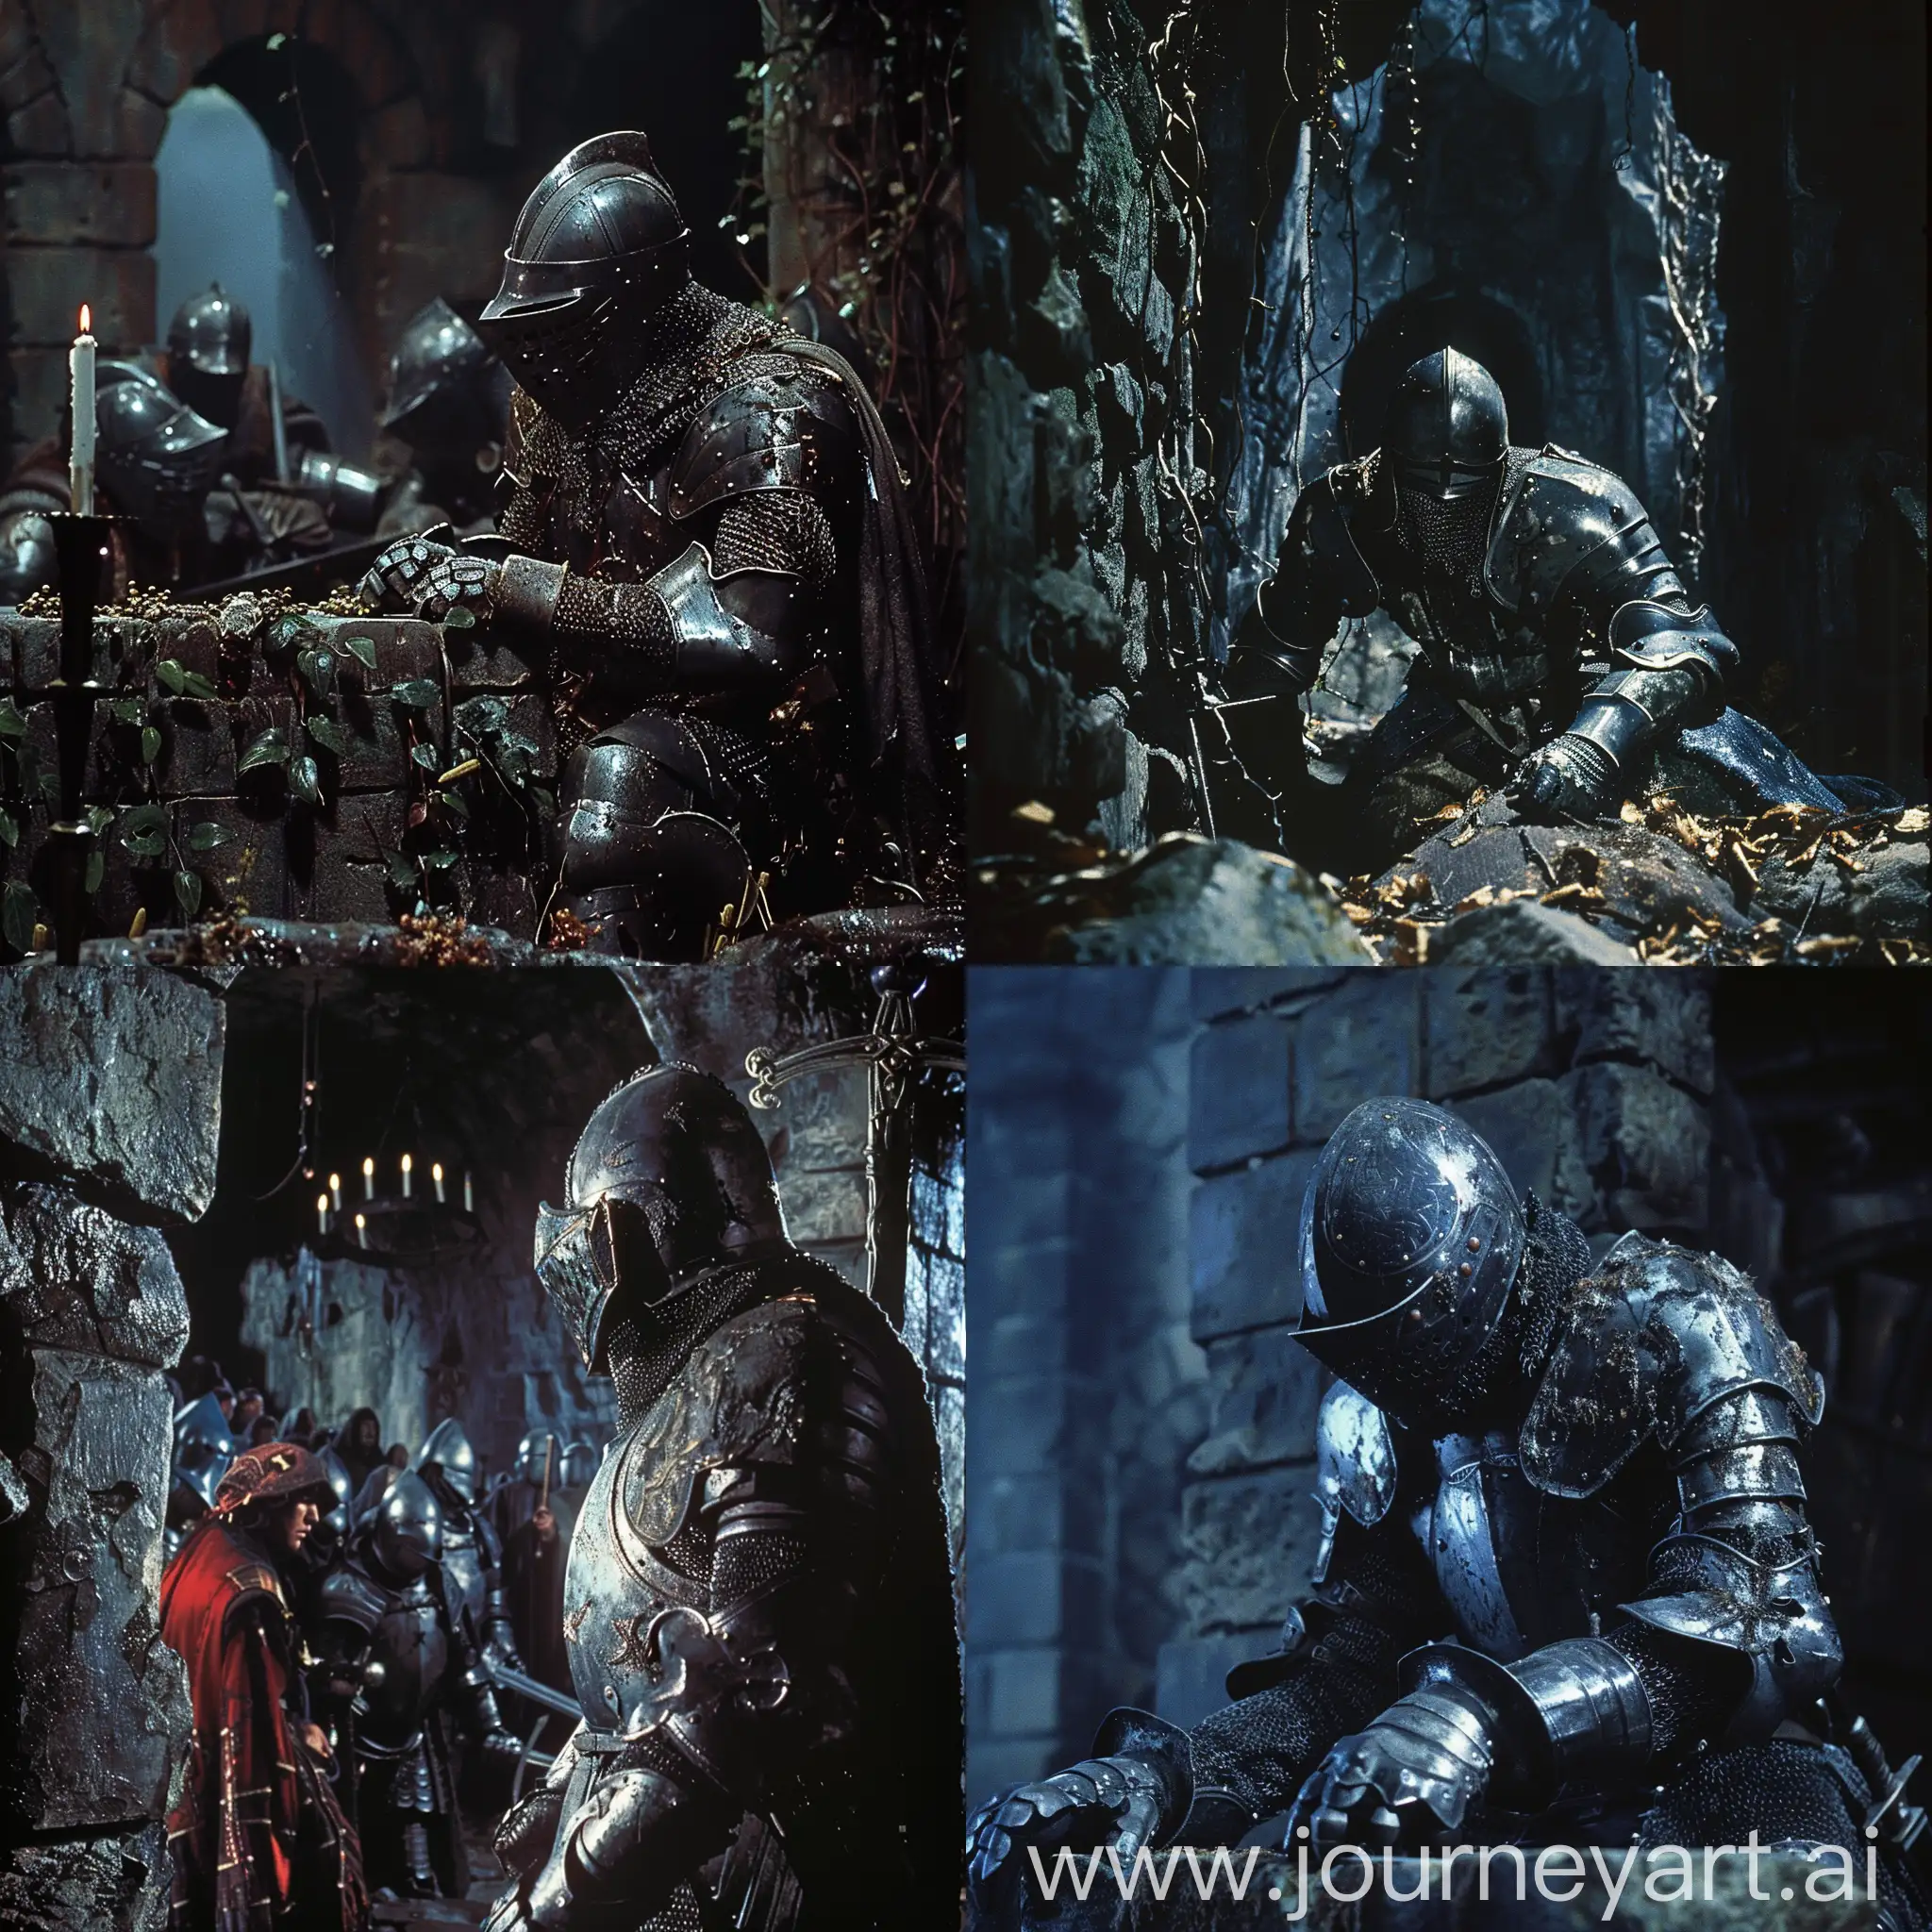 Knight-in-Armor-Amidst-Dark-Fantasy-Landscape-Cinematic-1980s-Movie-Scene